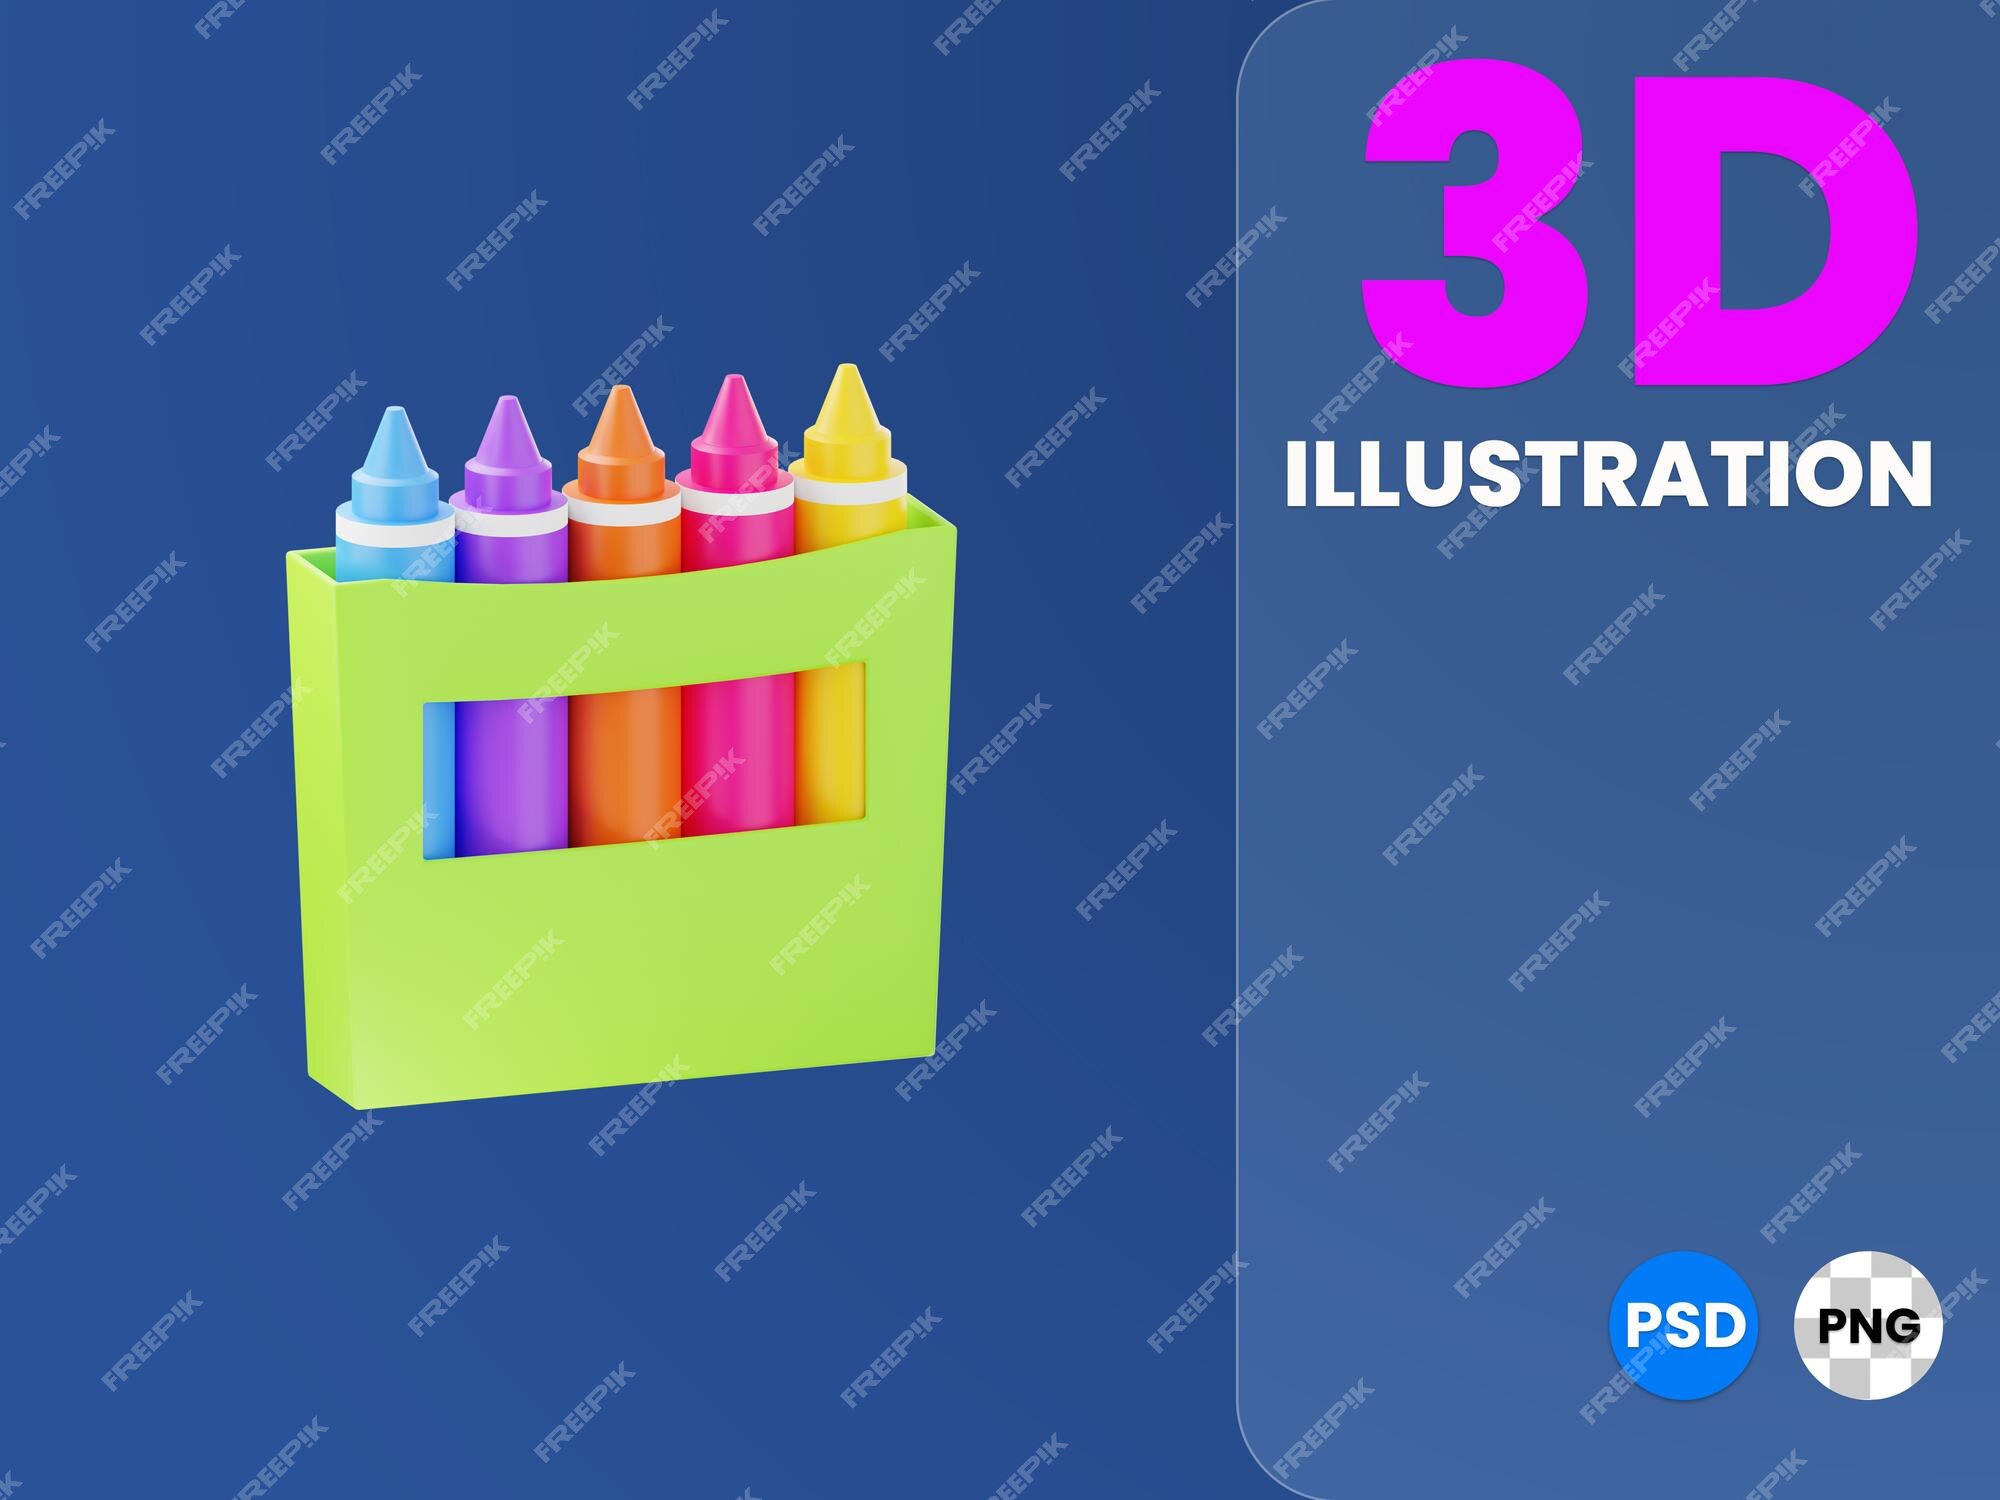 Premium PSD  Crayon 3d illustration render